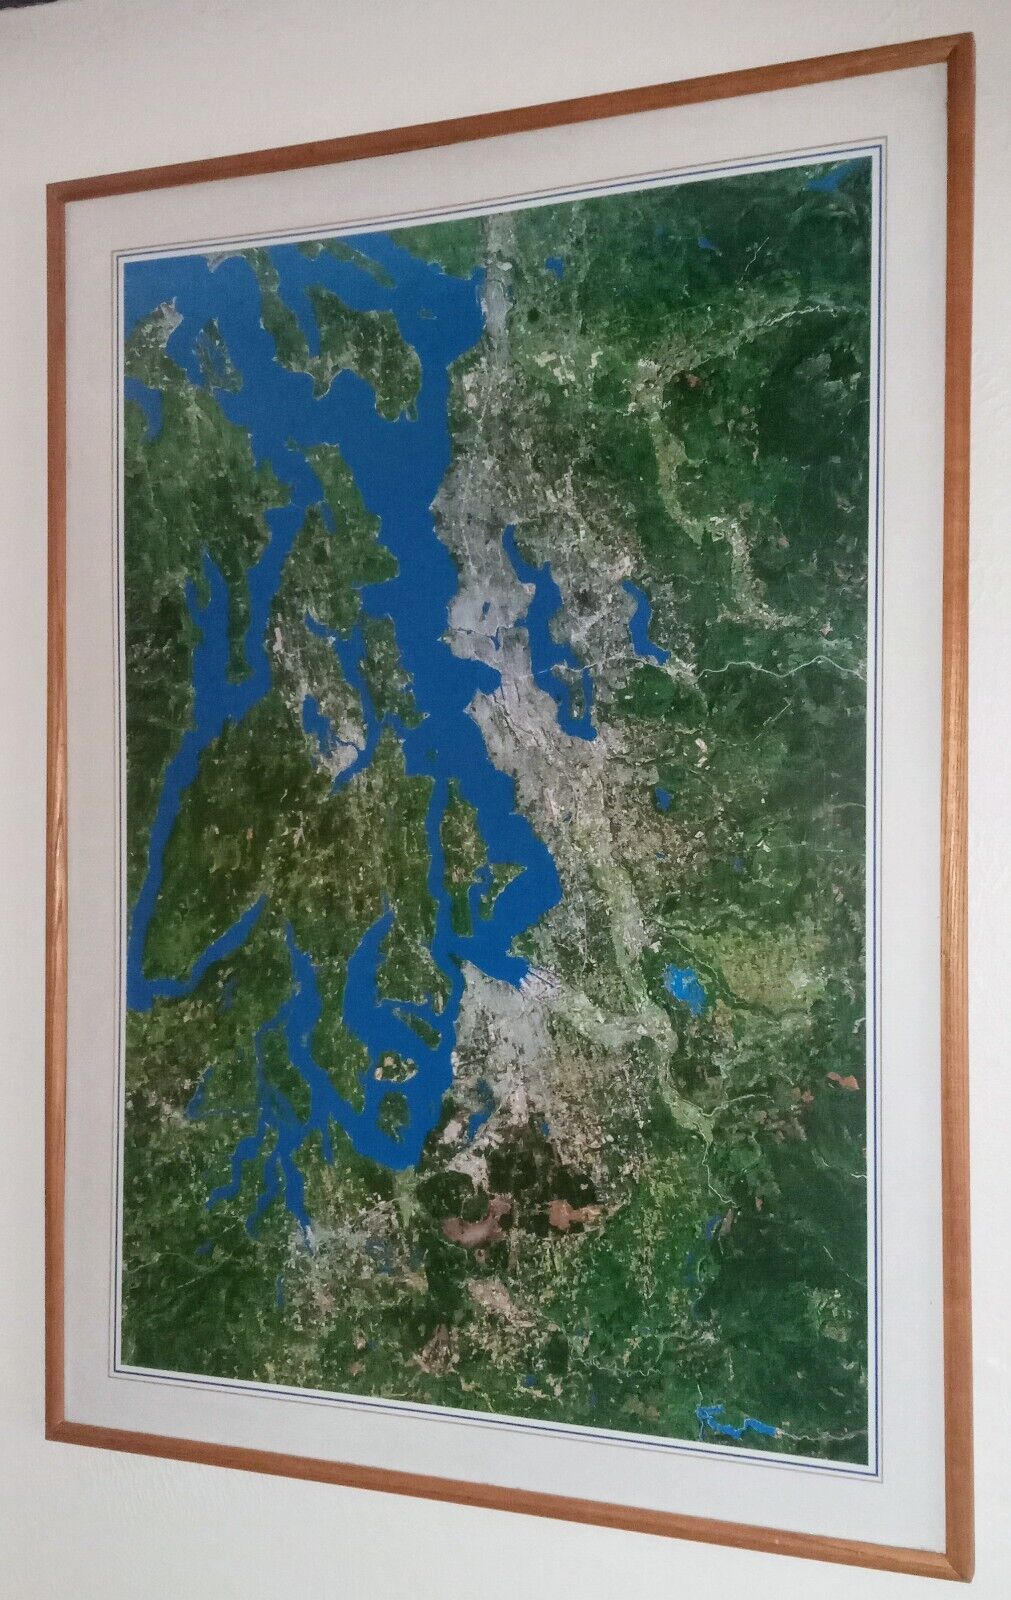 Puget Sound Washington WA satellite photograph matted framed vintage 1987 map